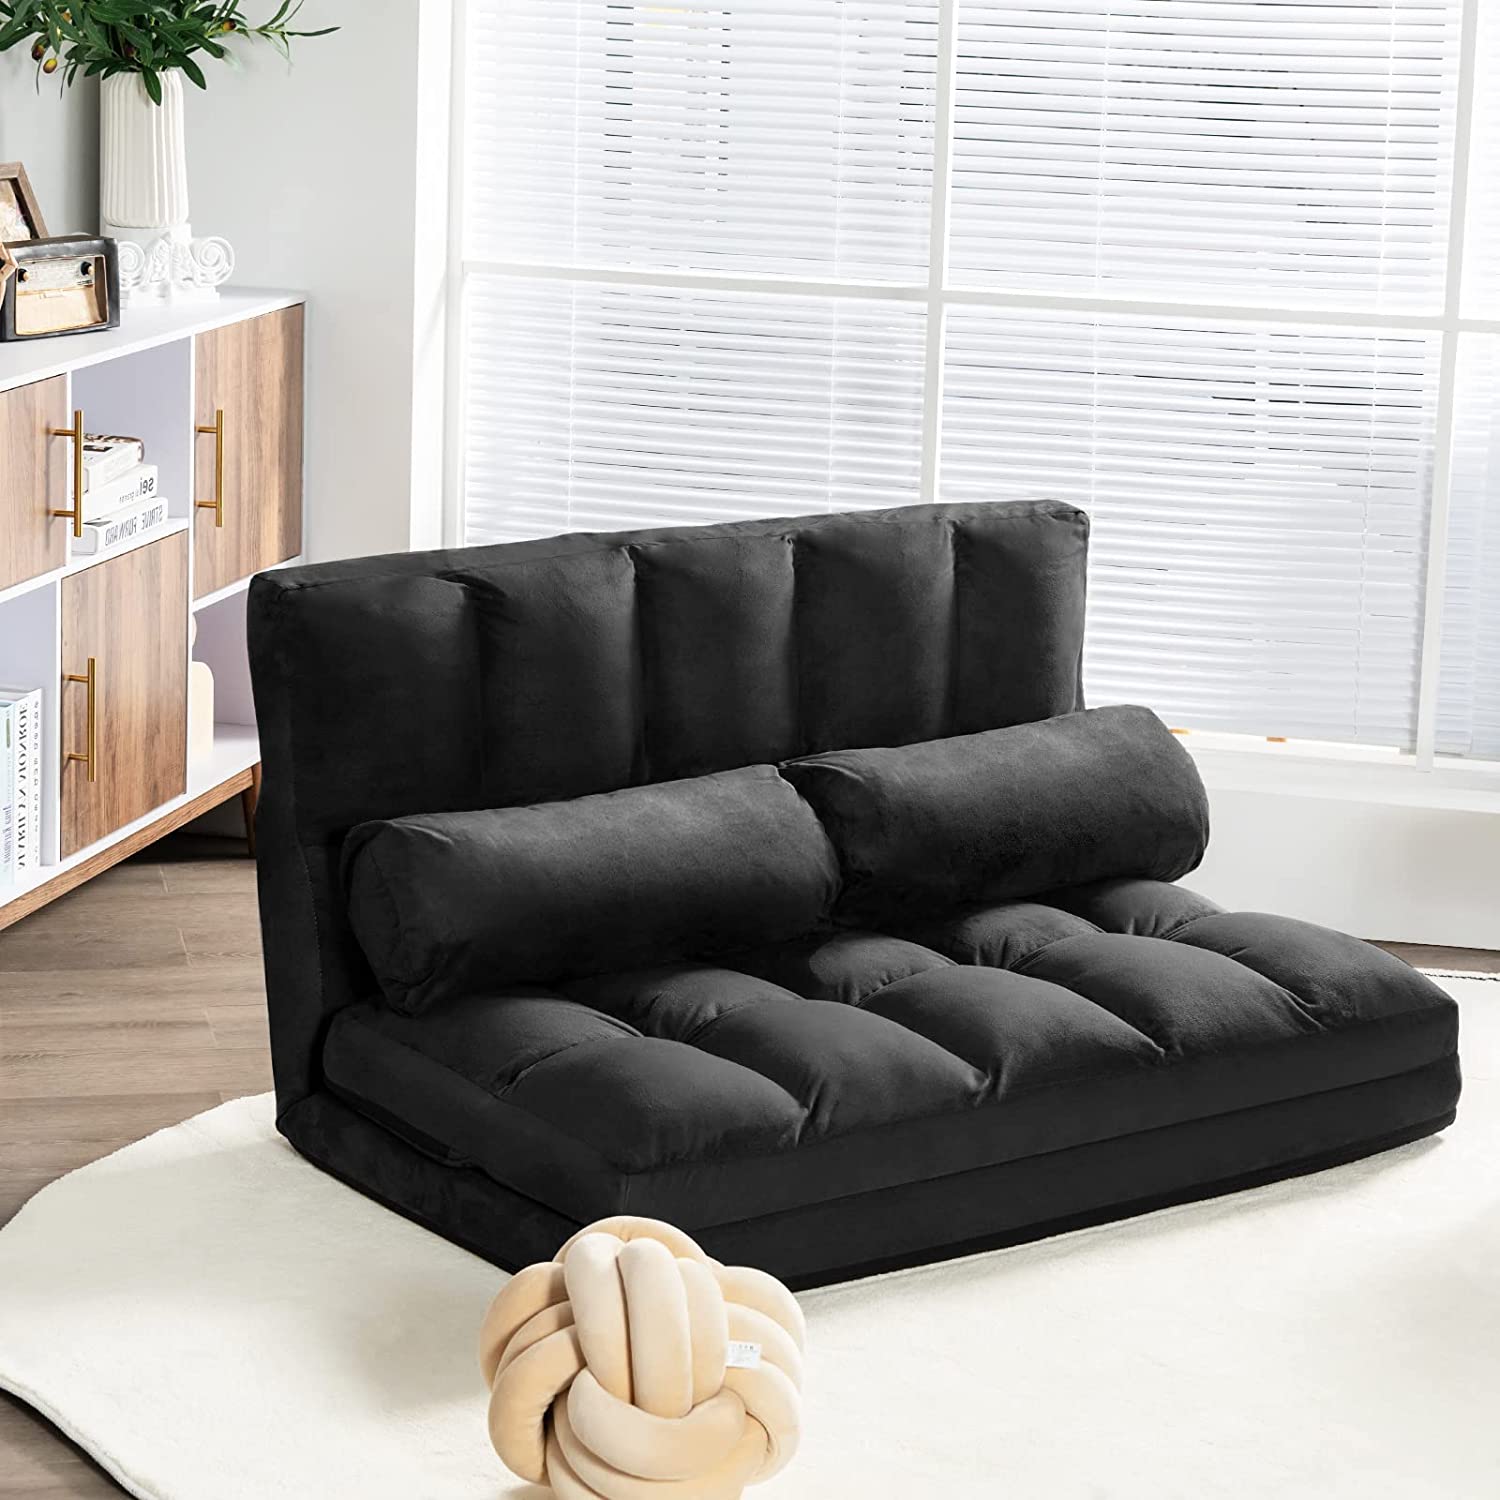 Adjustable Floor Sofa, Foldable Lazy Sofa Sleeper Bed 6-Position Adjustable,2 Pillows